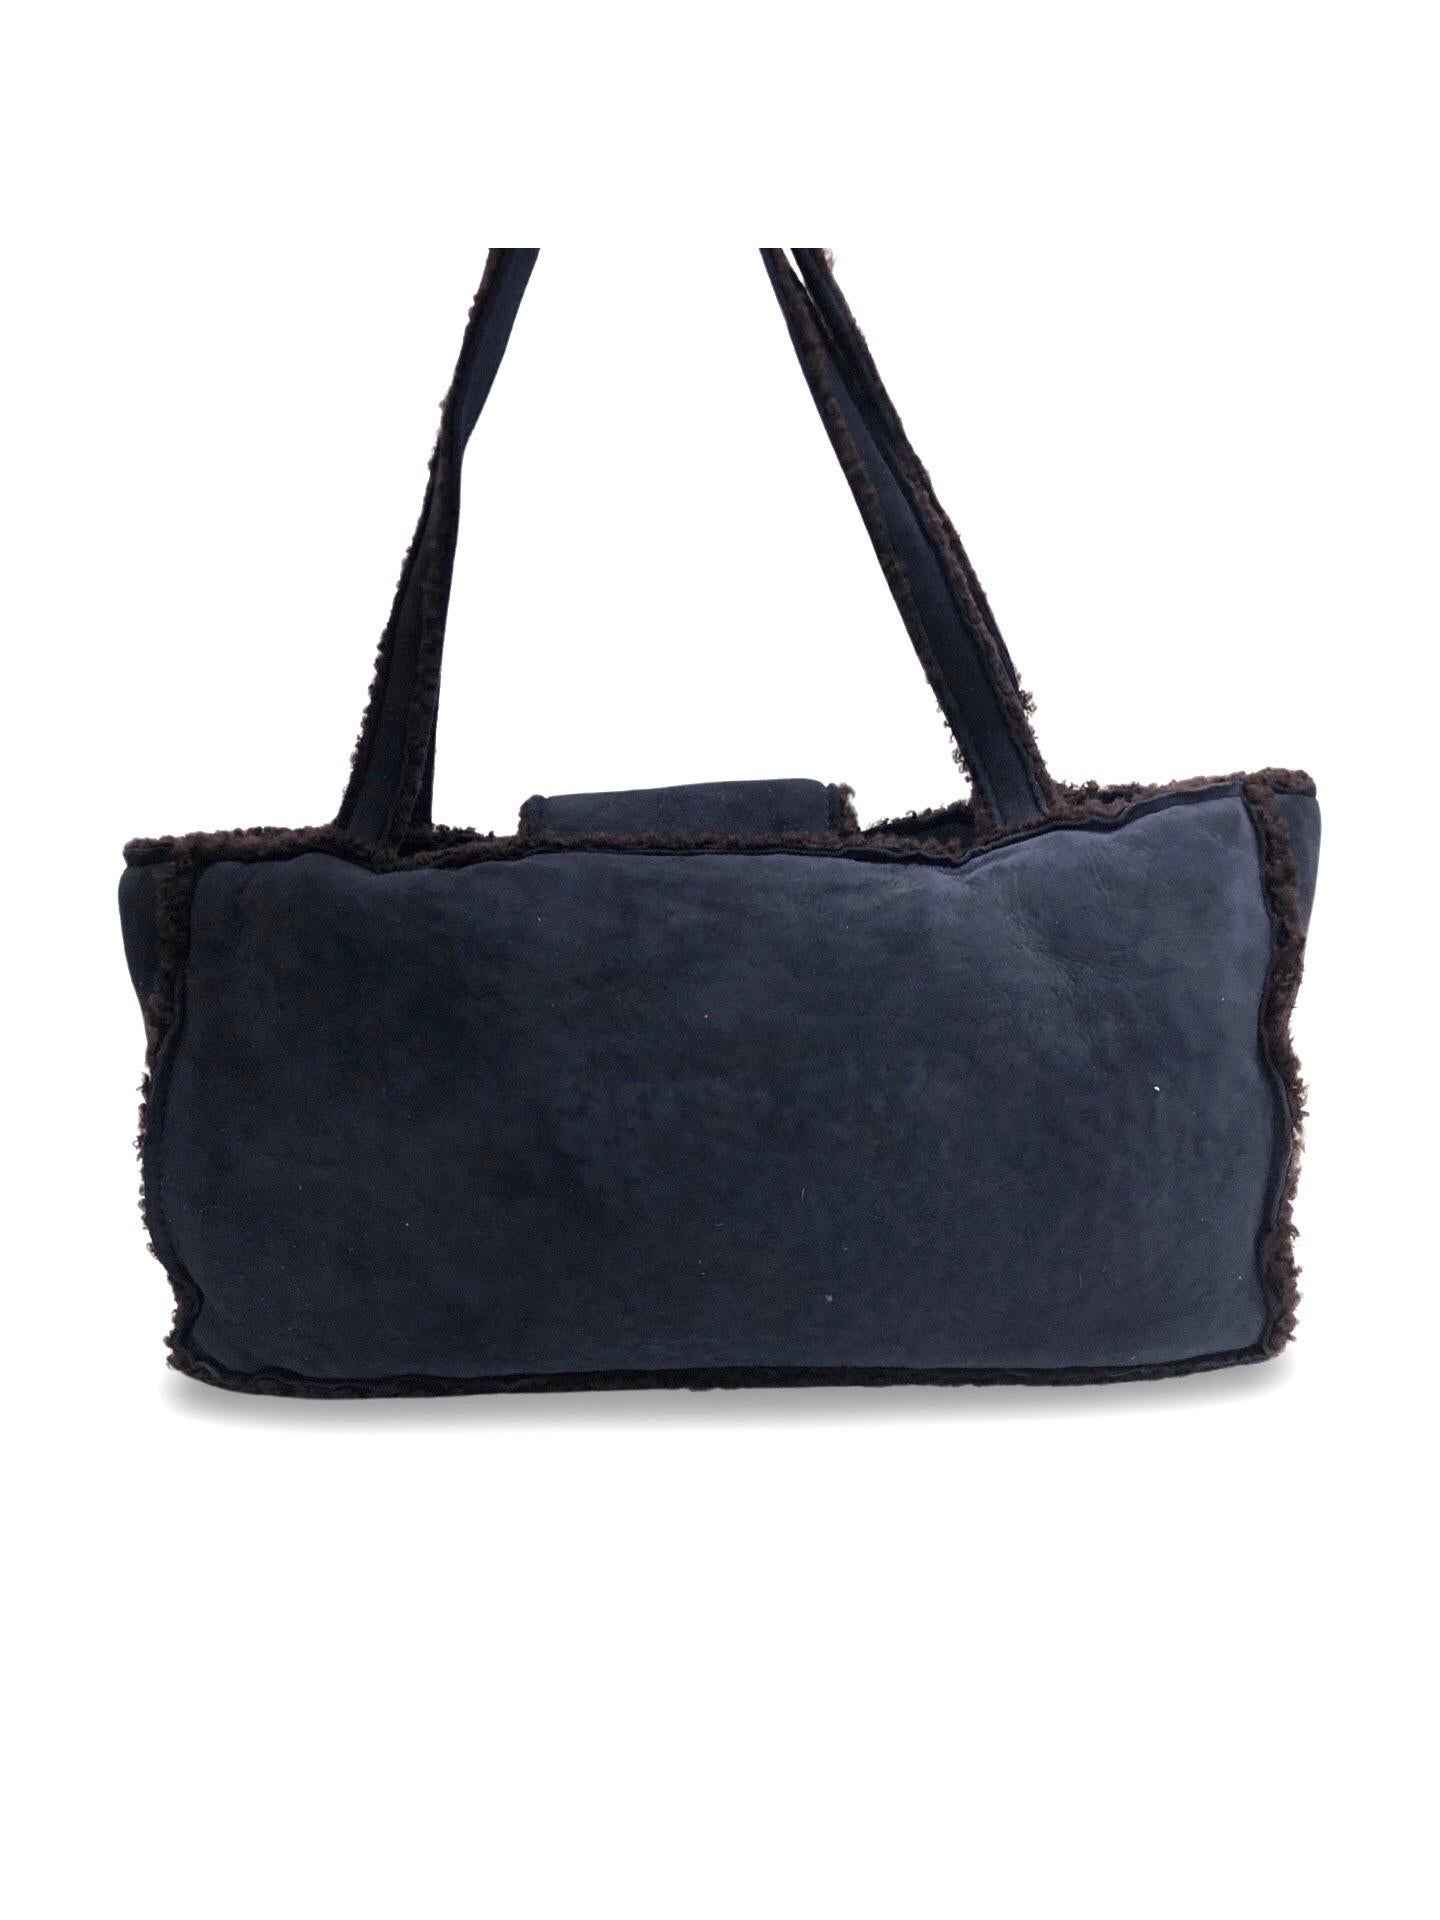 Women's or Men's Chanel Navy Blue Suede Shearling Trim CC Turnlock Shoulder Handbag For Sale